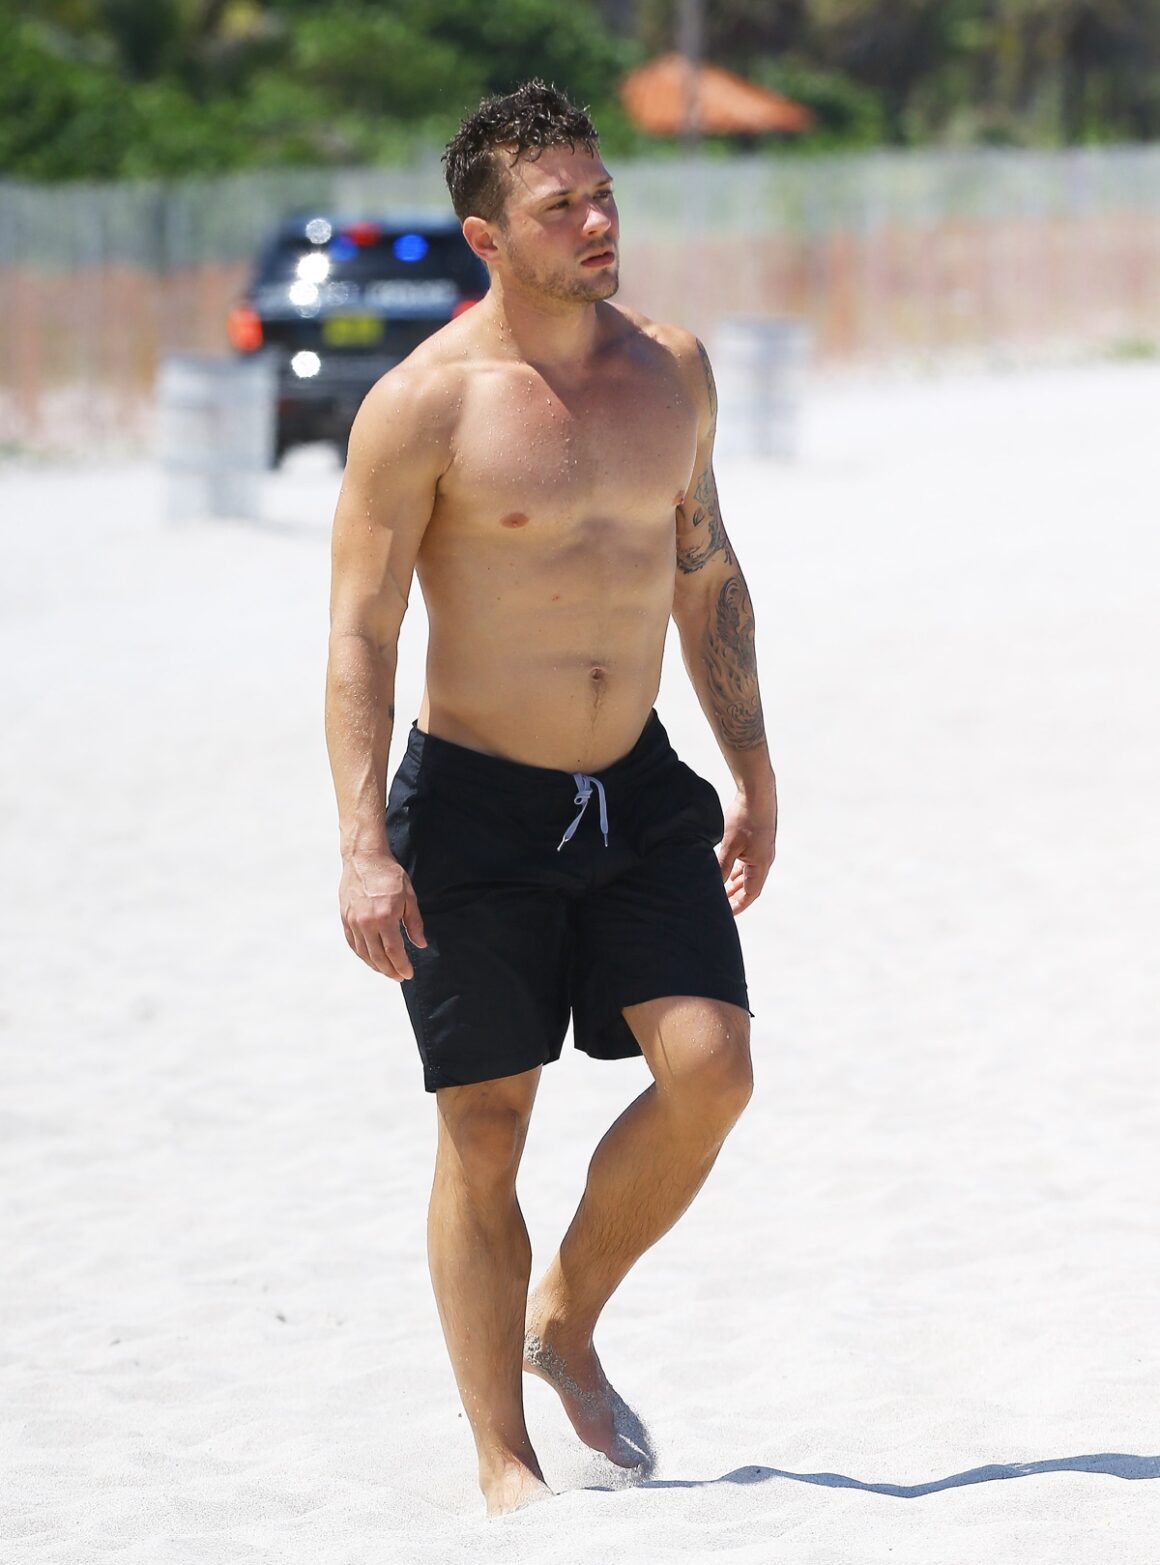 Enjoy these shirtless beach photos of Ryan Phillippe.